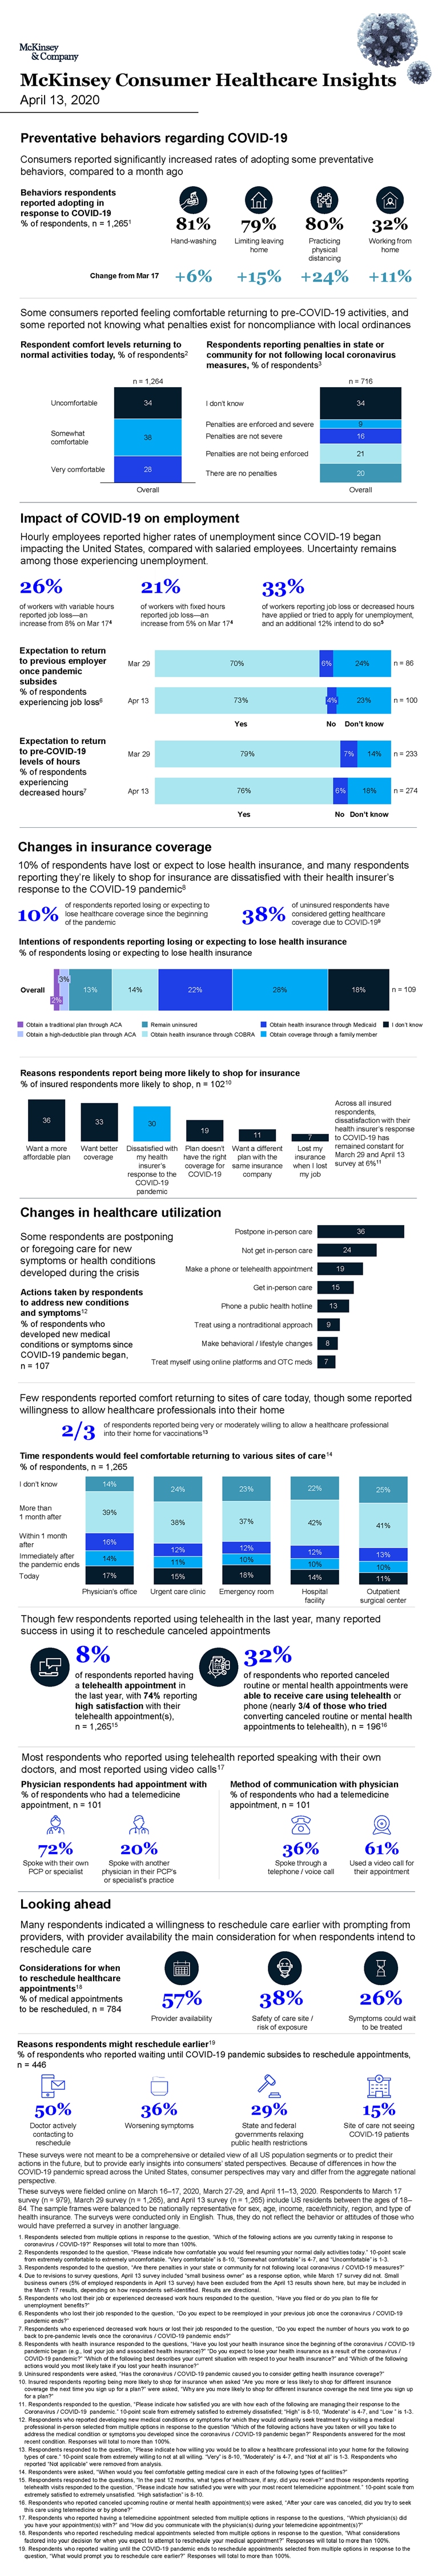 McKinsey Consumer Healthcare Insights, April 13, 2020